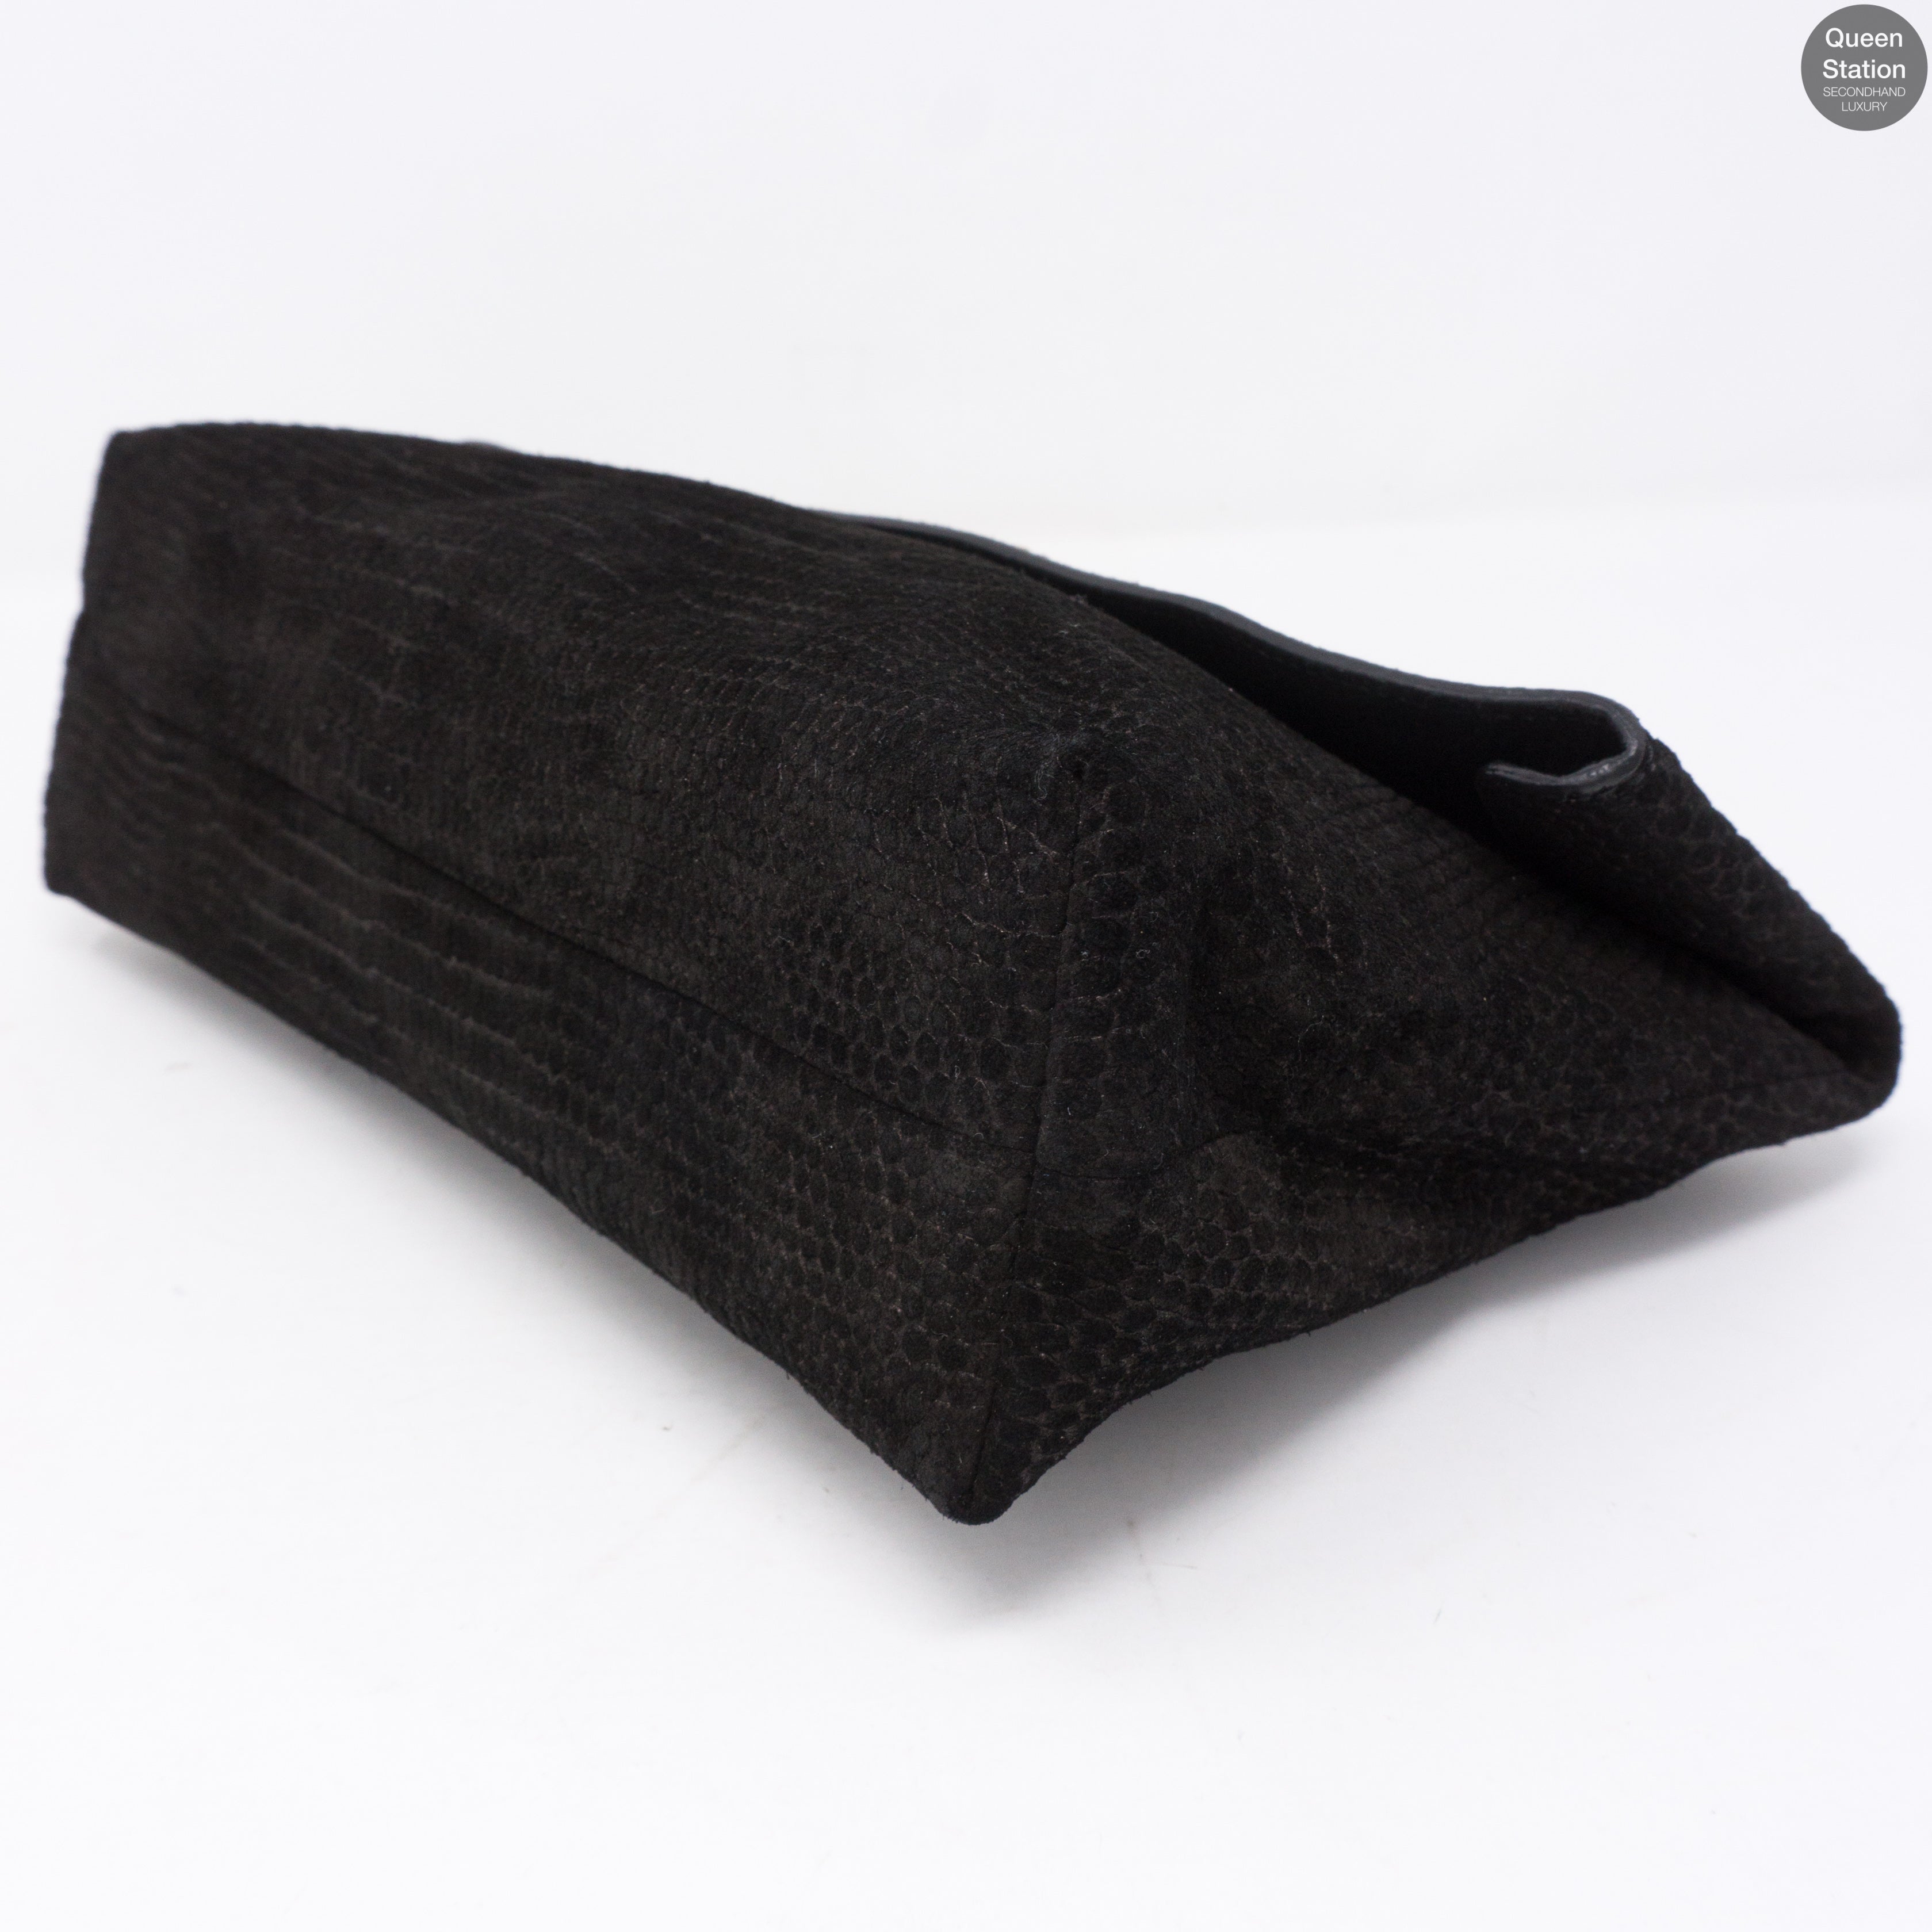 Vintage BLACK SUEDE Clutch Purse Bag Kisslock Plastic Closure Made In Italy  | eBay